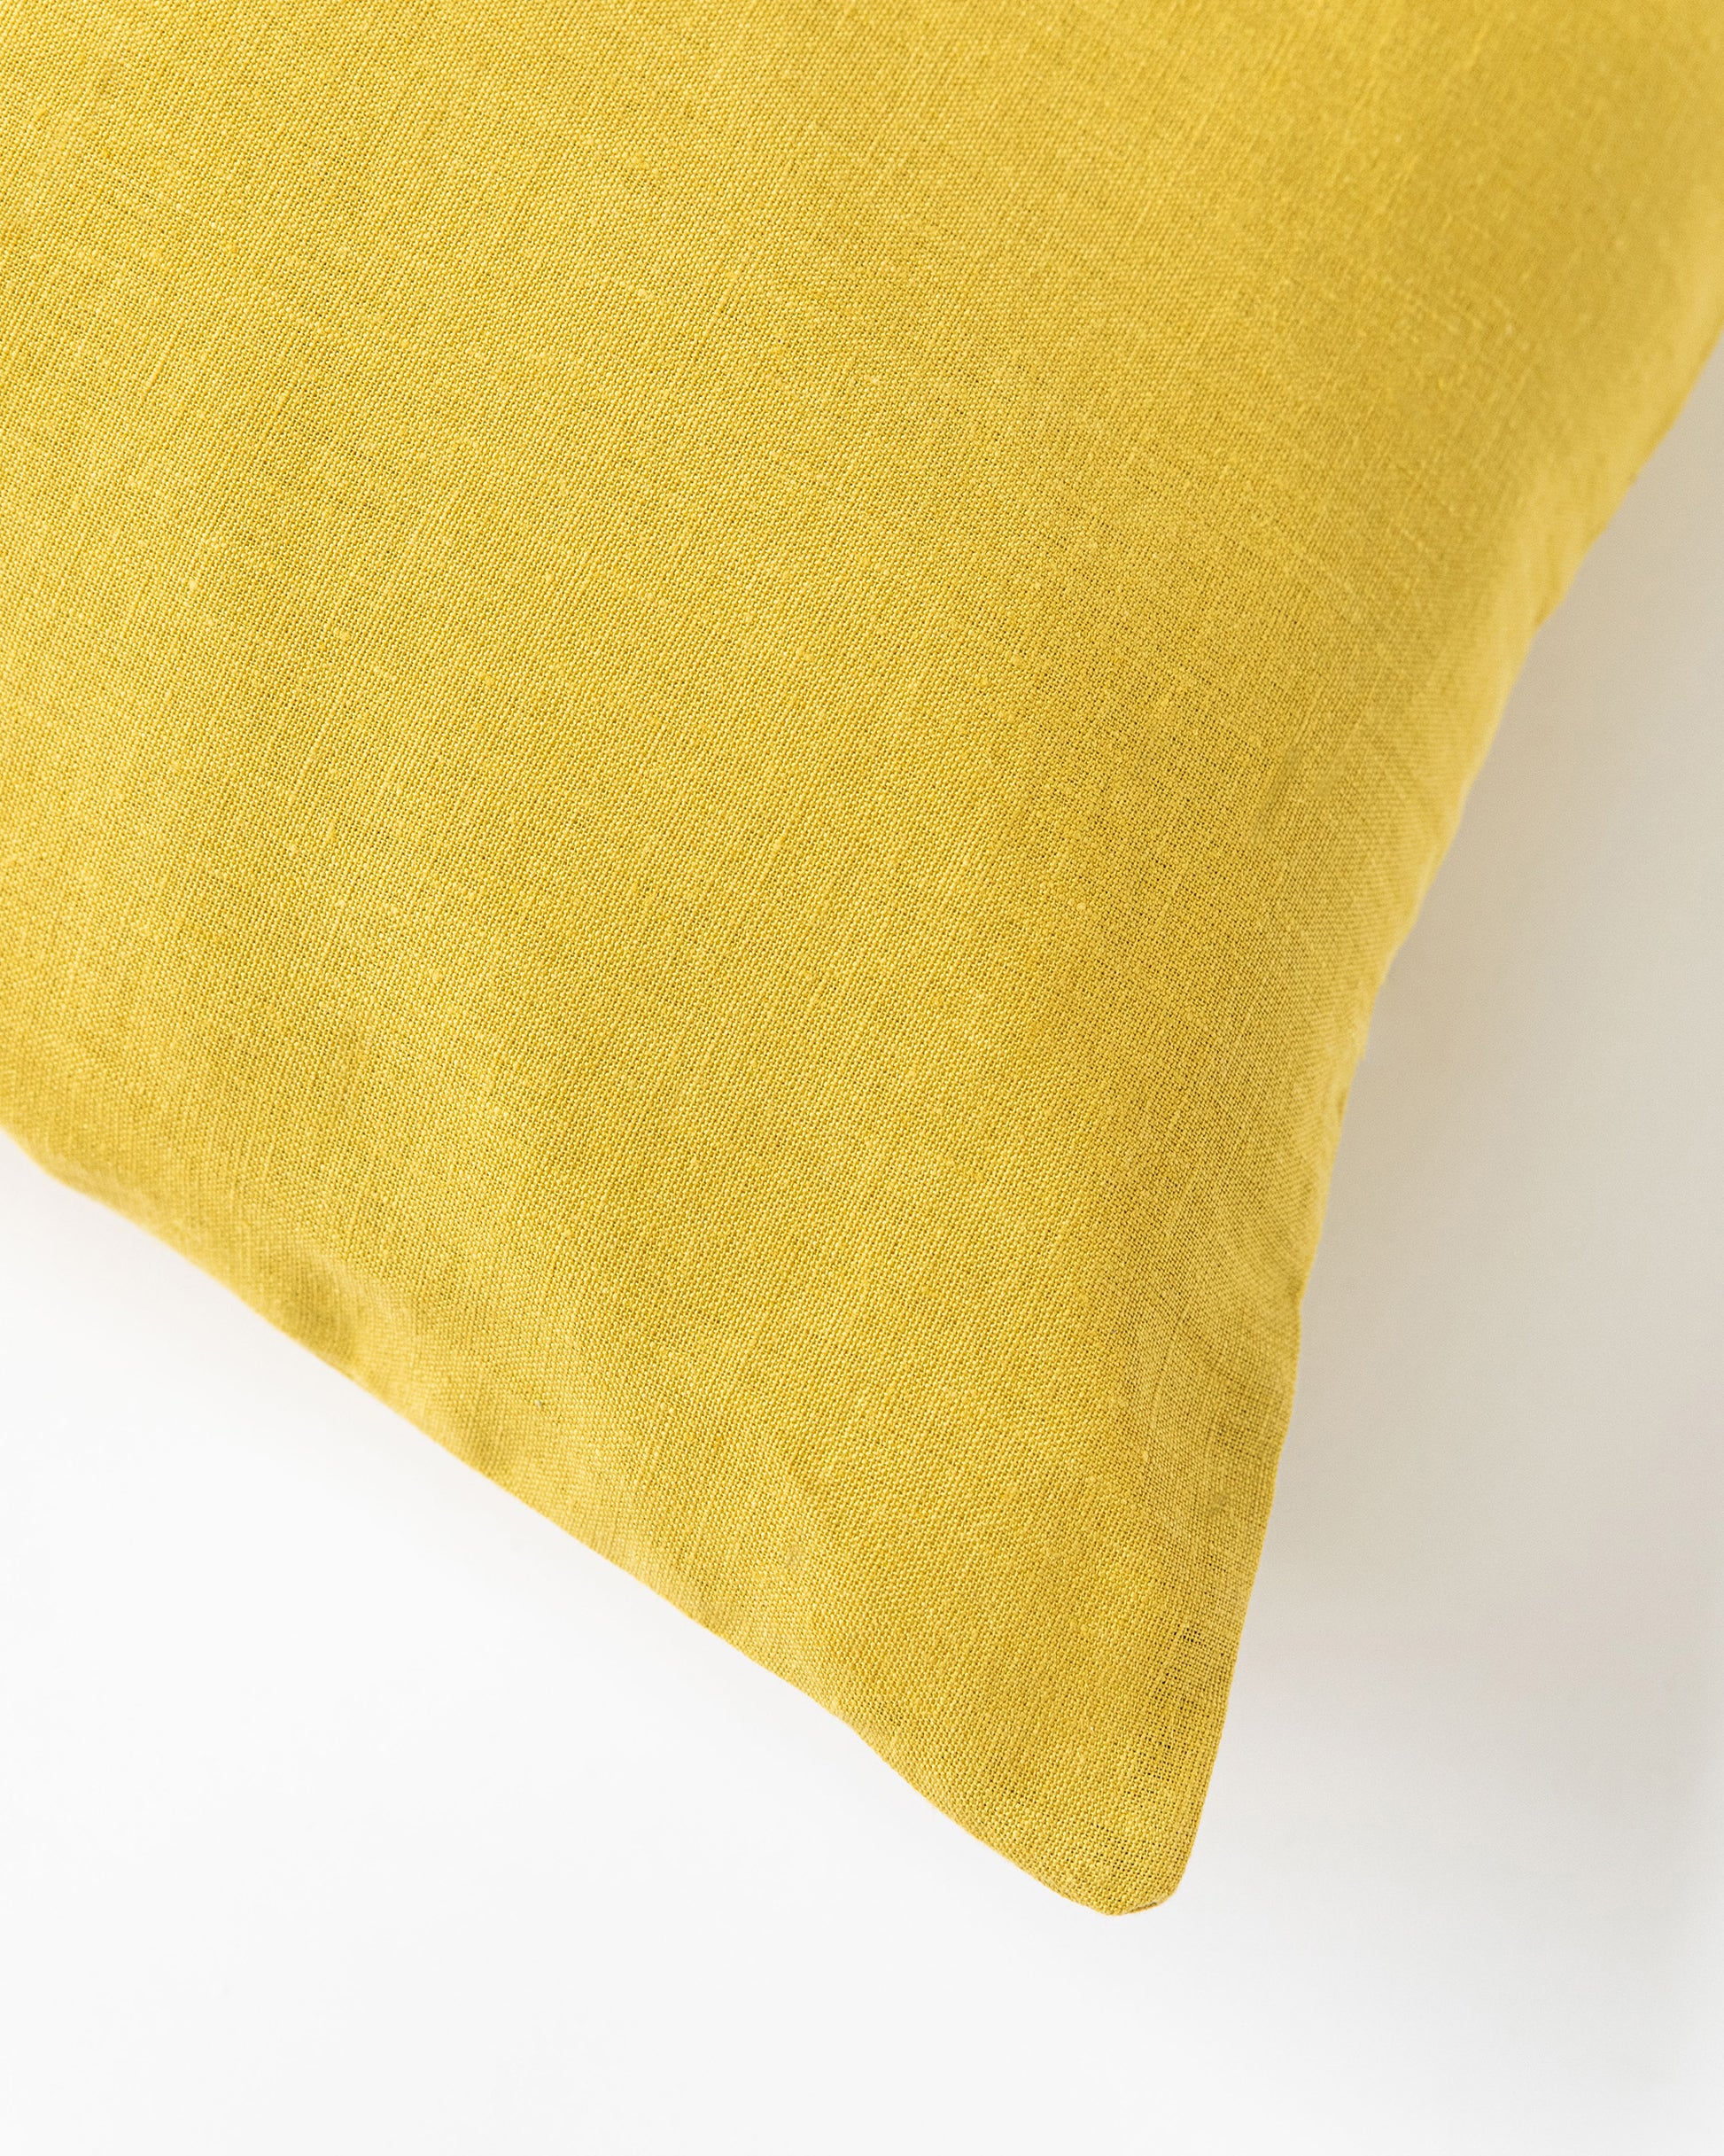 Body pillowcase in Moss yellow - MagicLinen